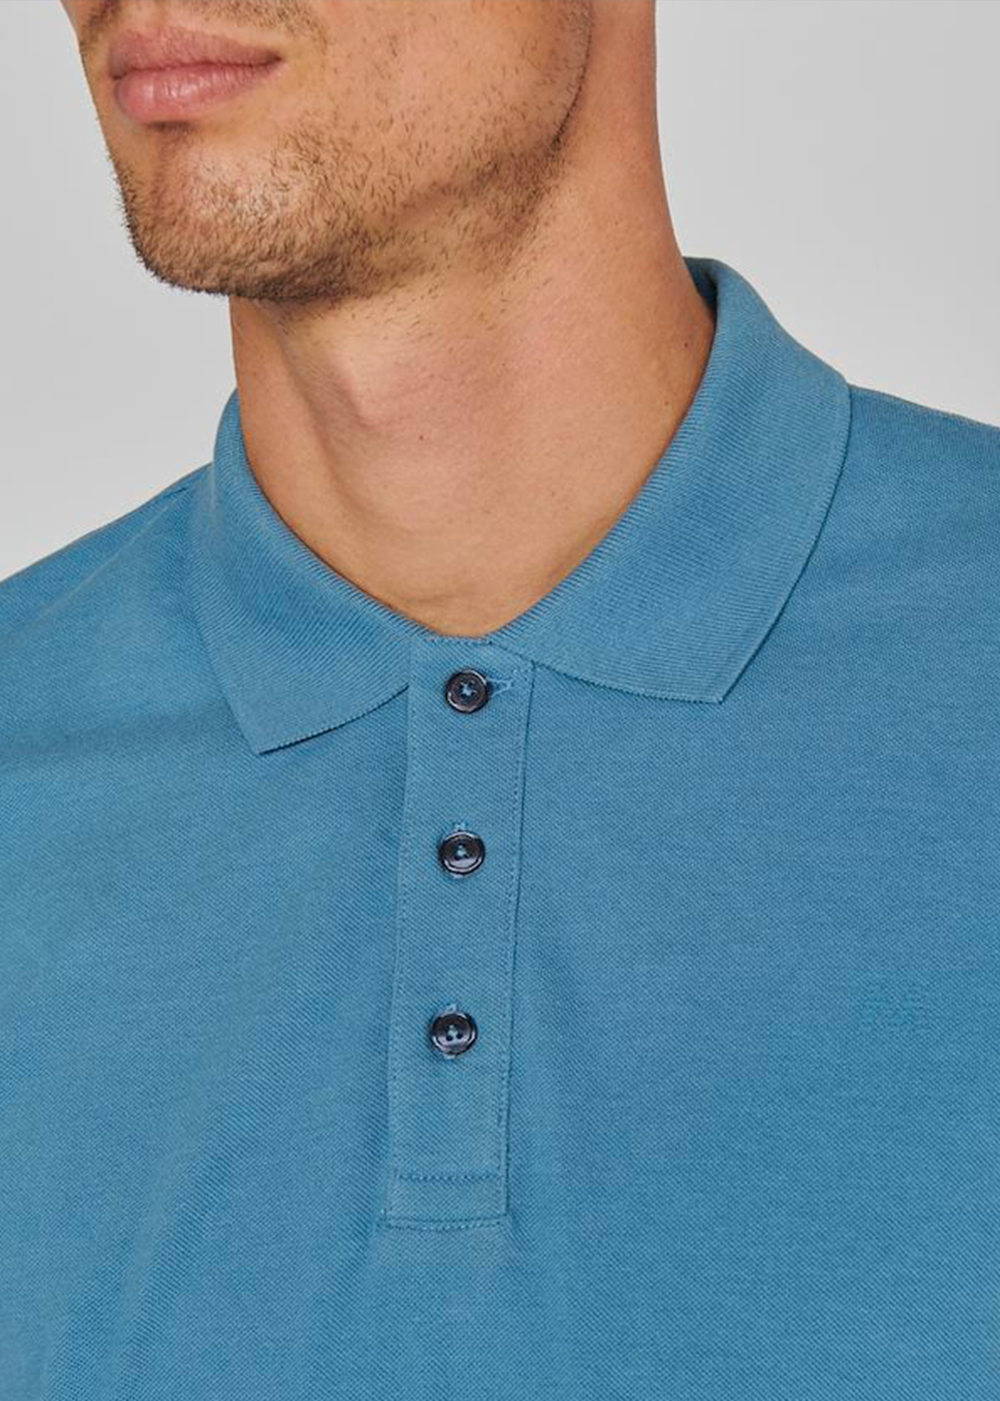 Poleo Melange Polo T-Shirt - Captain's Blue - Matinique Canada - Danali - 30206461